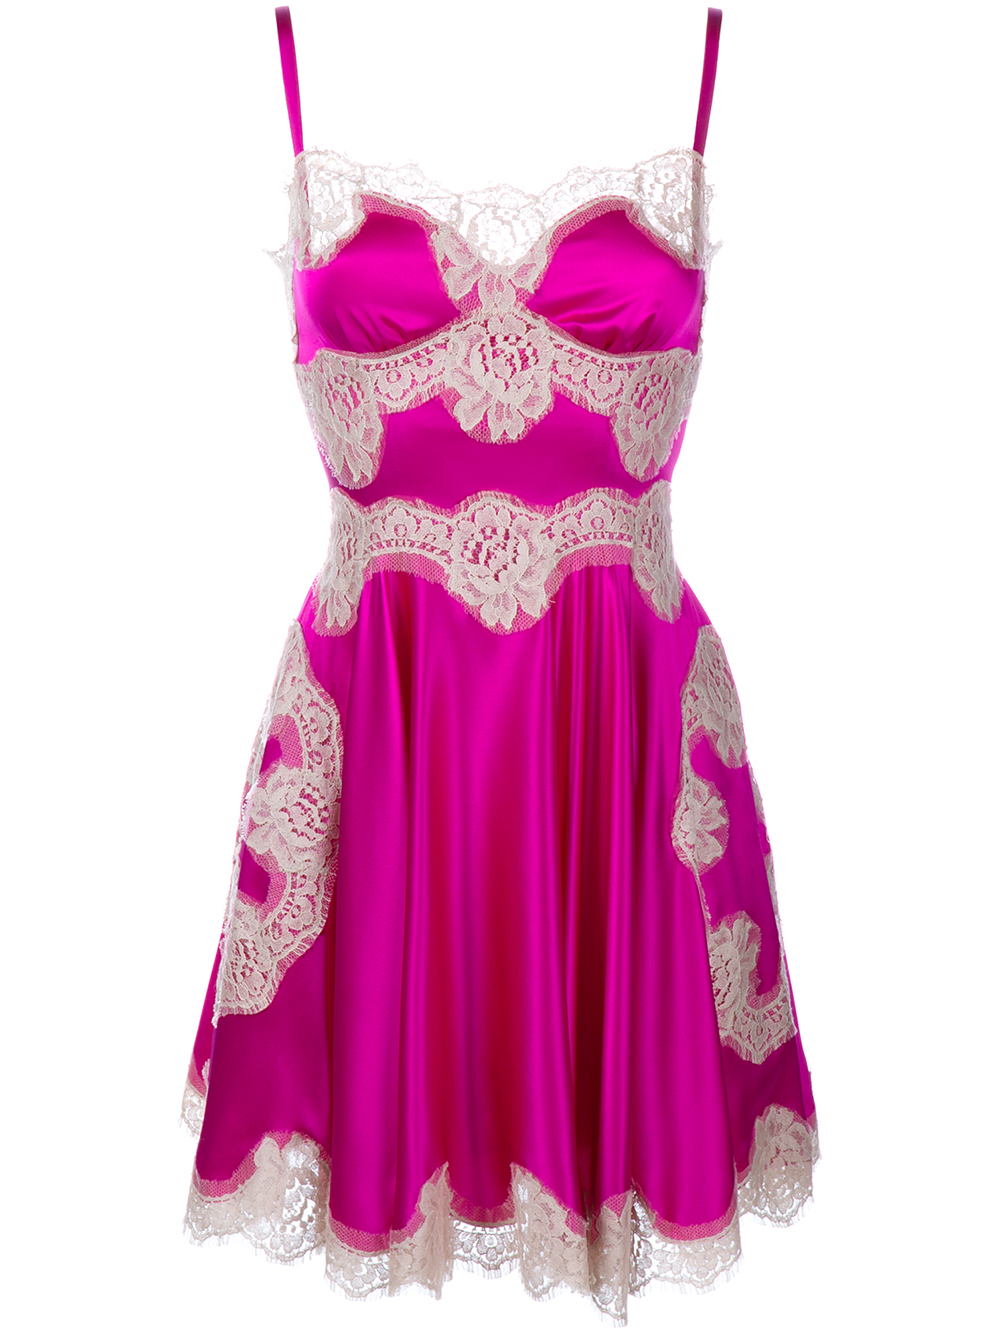 Lyst - Dolce & gabbana Silk And Lace Slip Dress in Purple